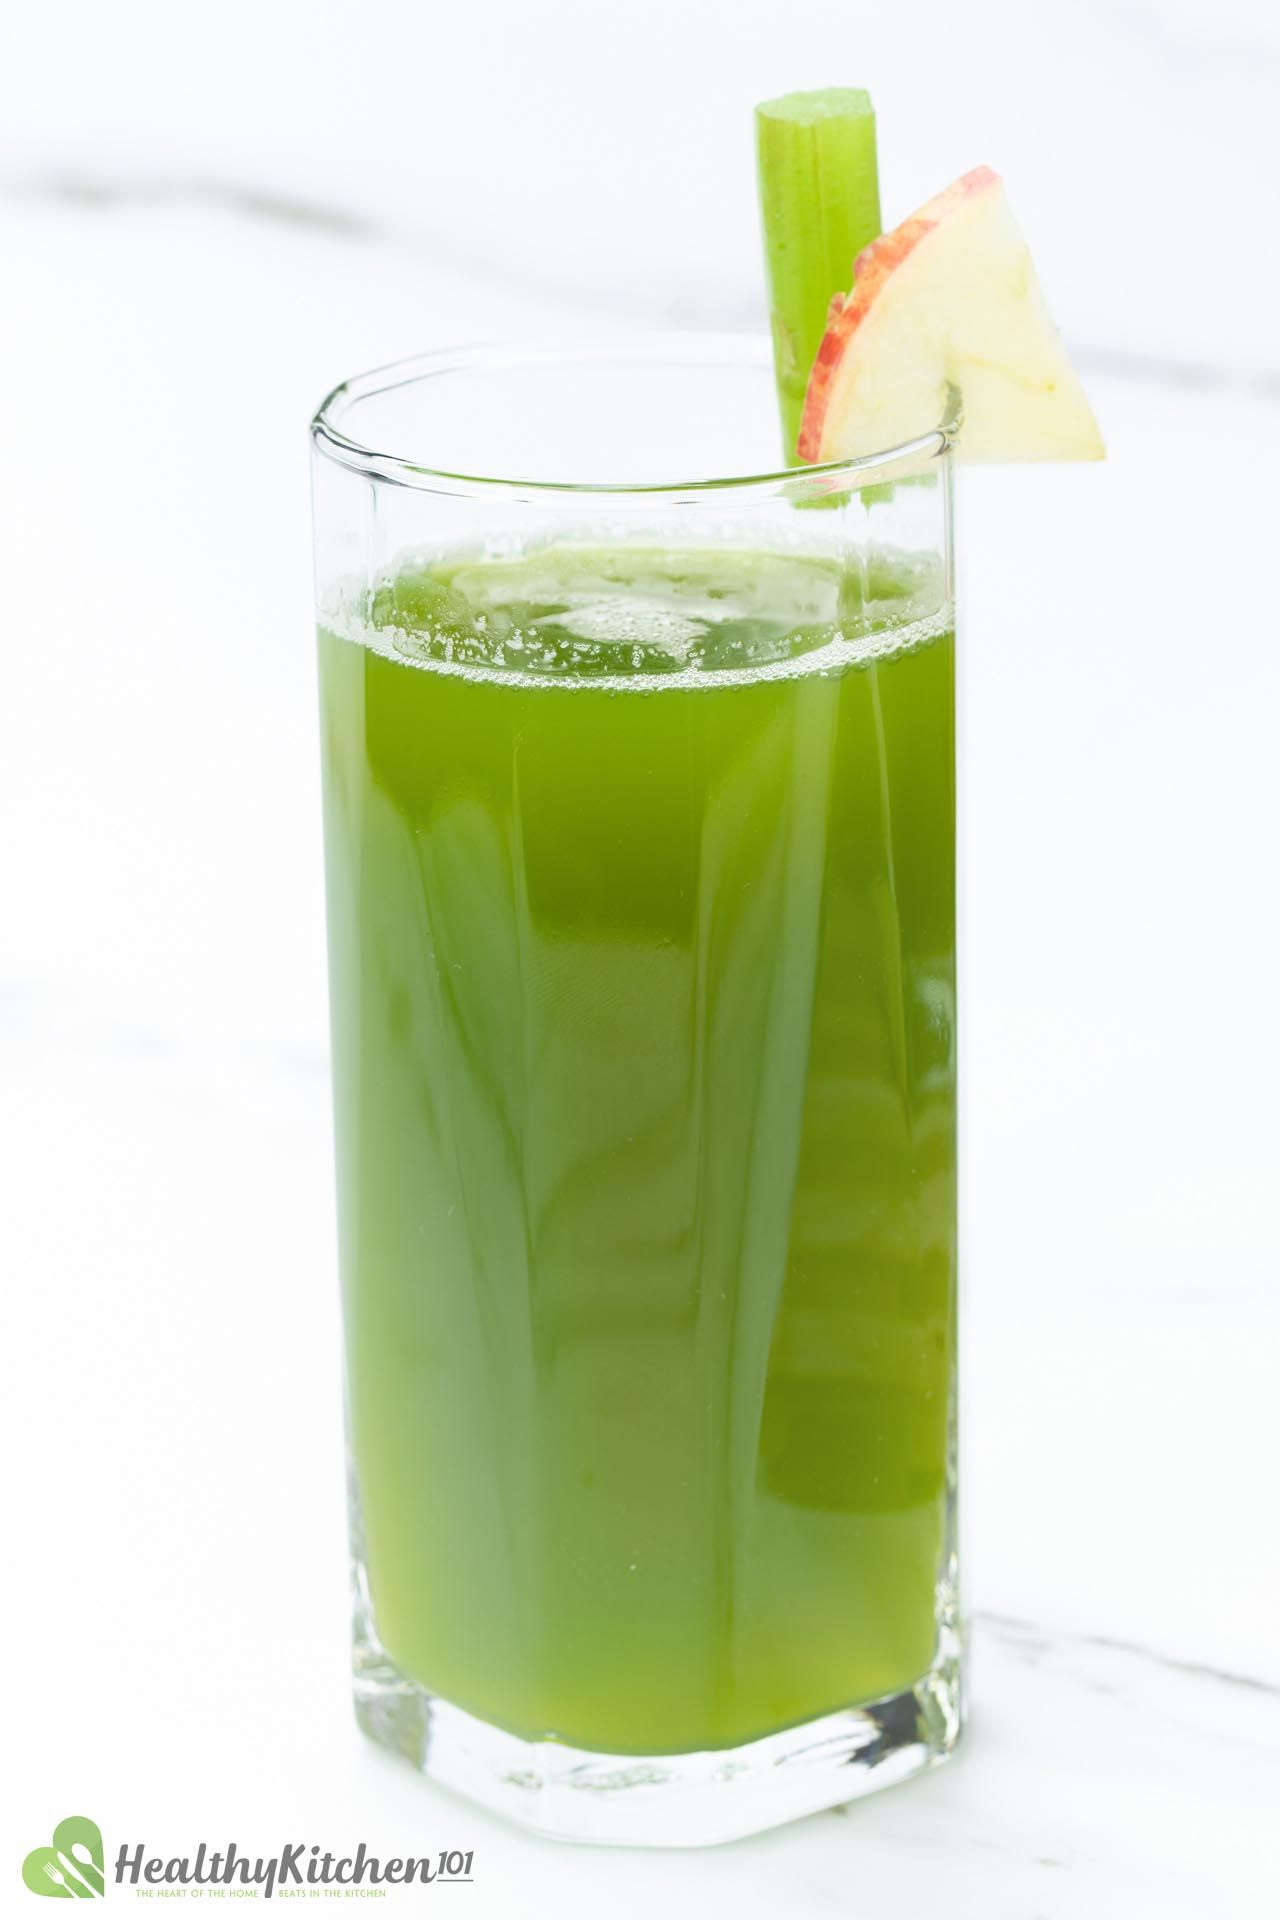 Benefits of Apple Celery Juice